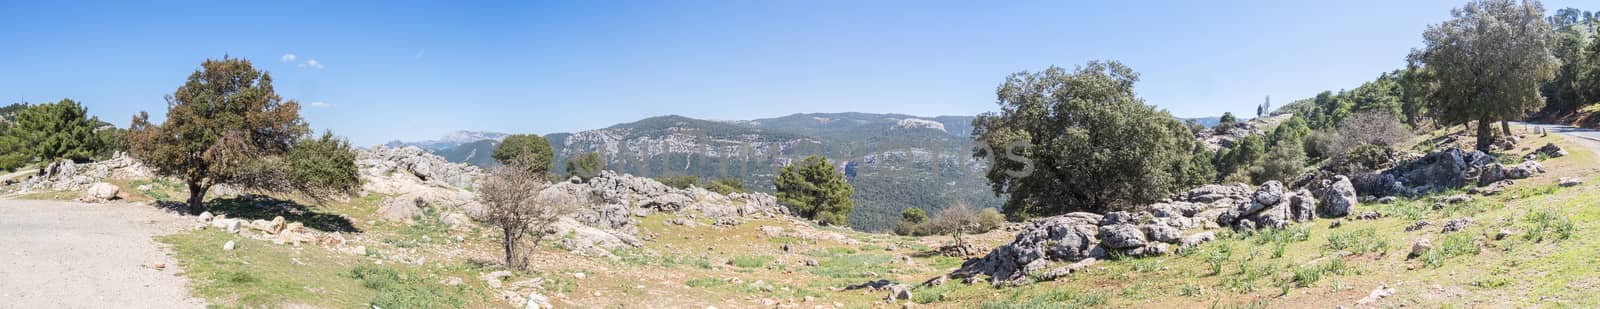 Paso del aire viewpoint in Sierra de Cazorla, Jaen, Spain by max8xam